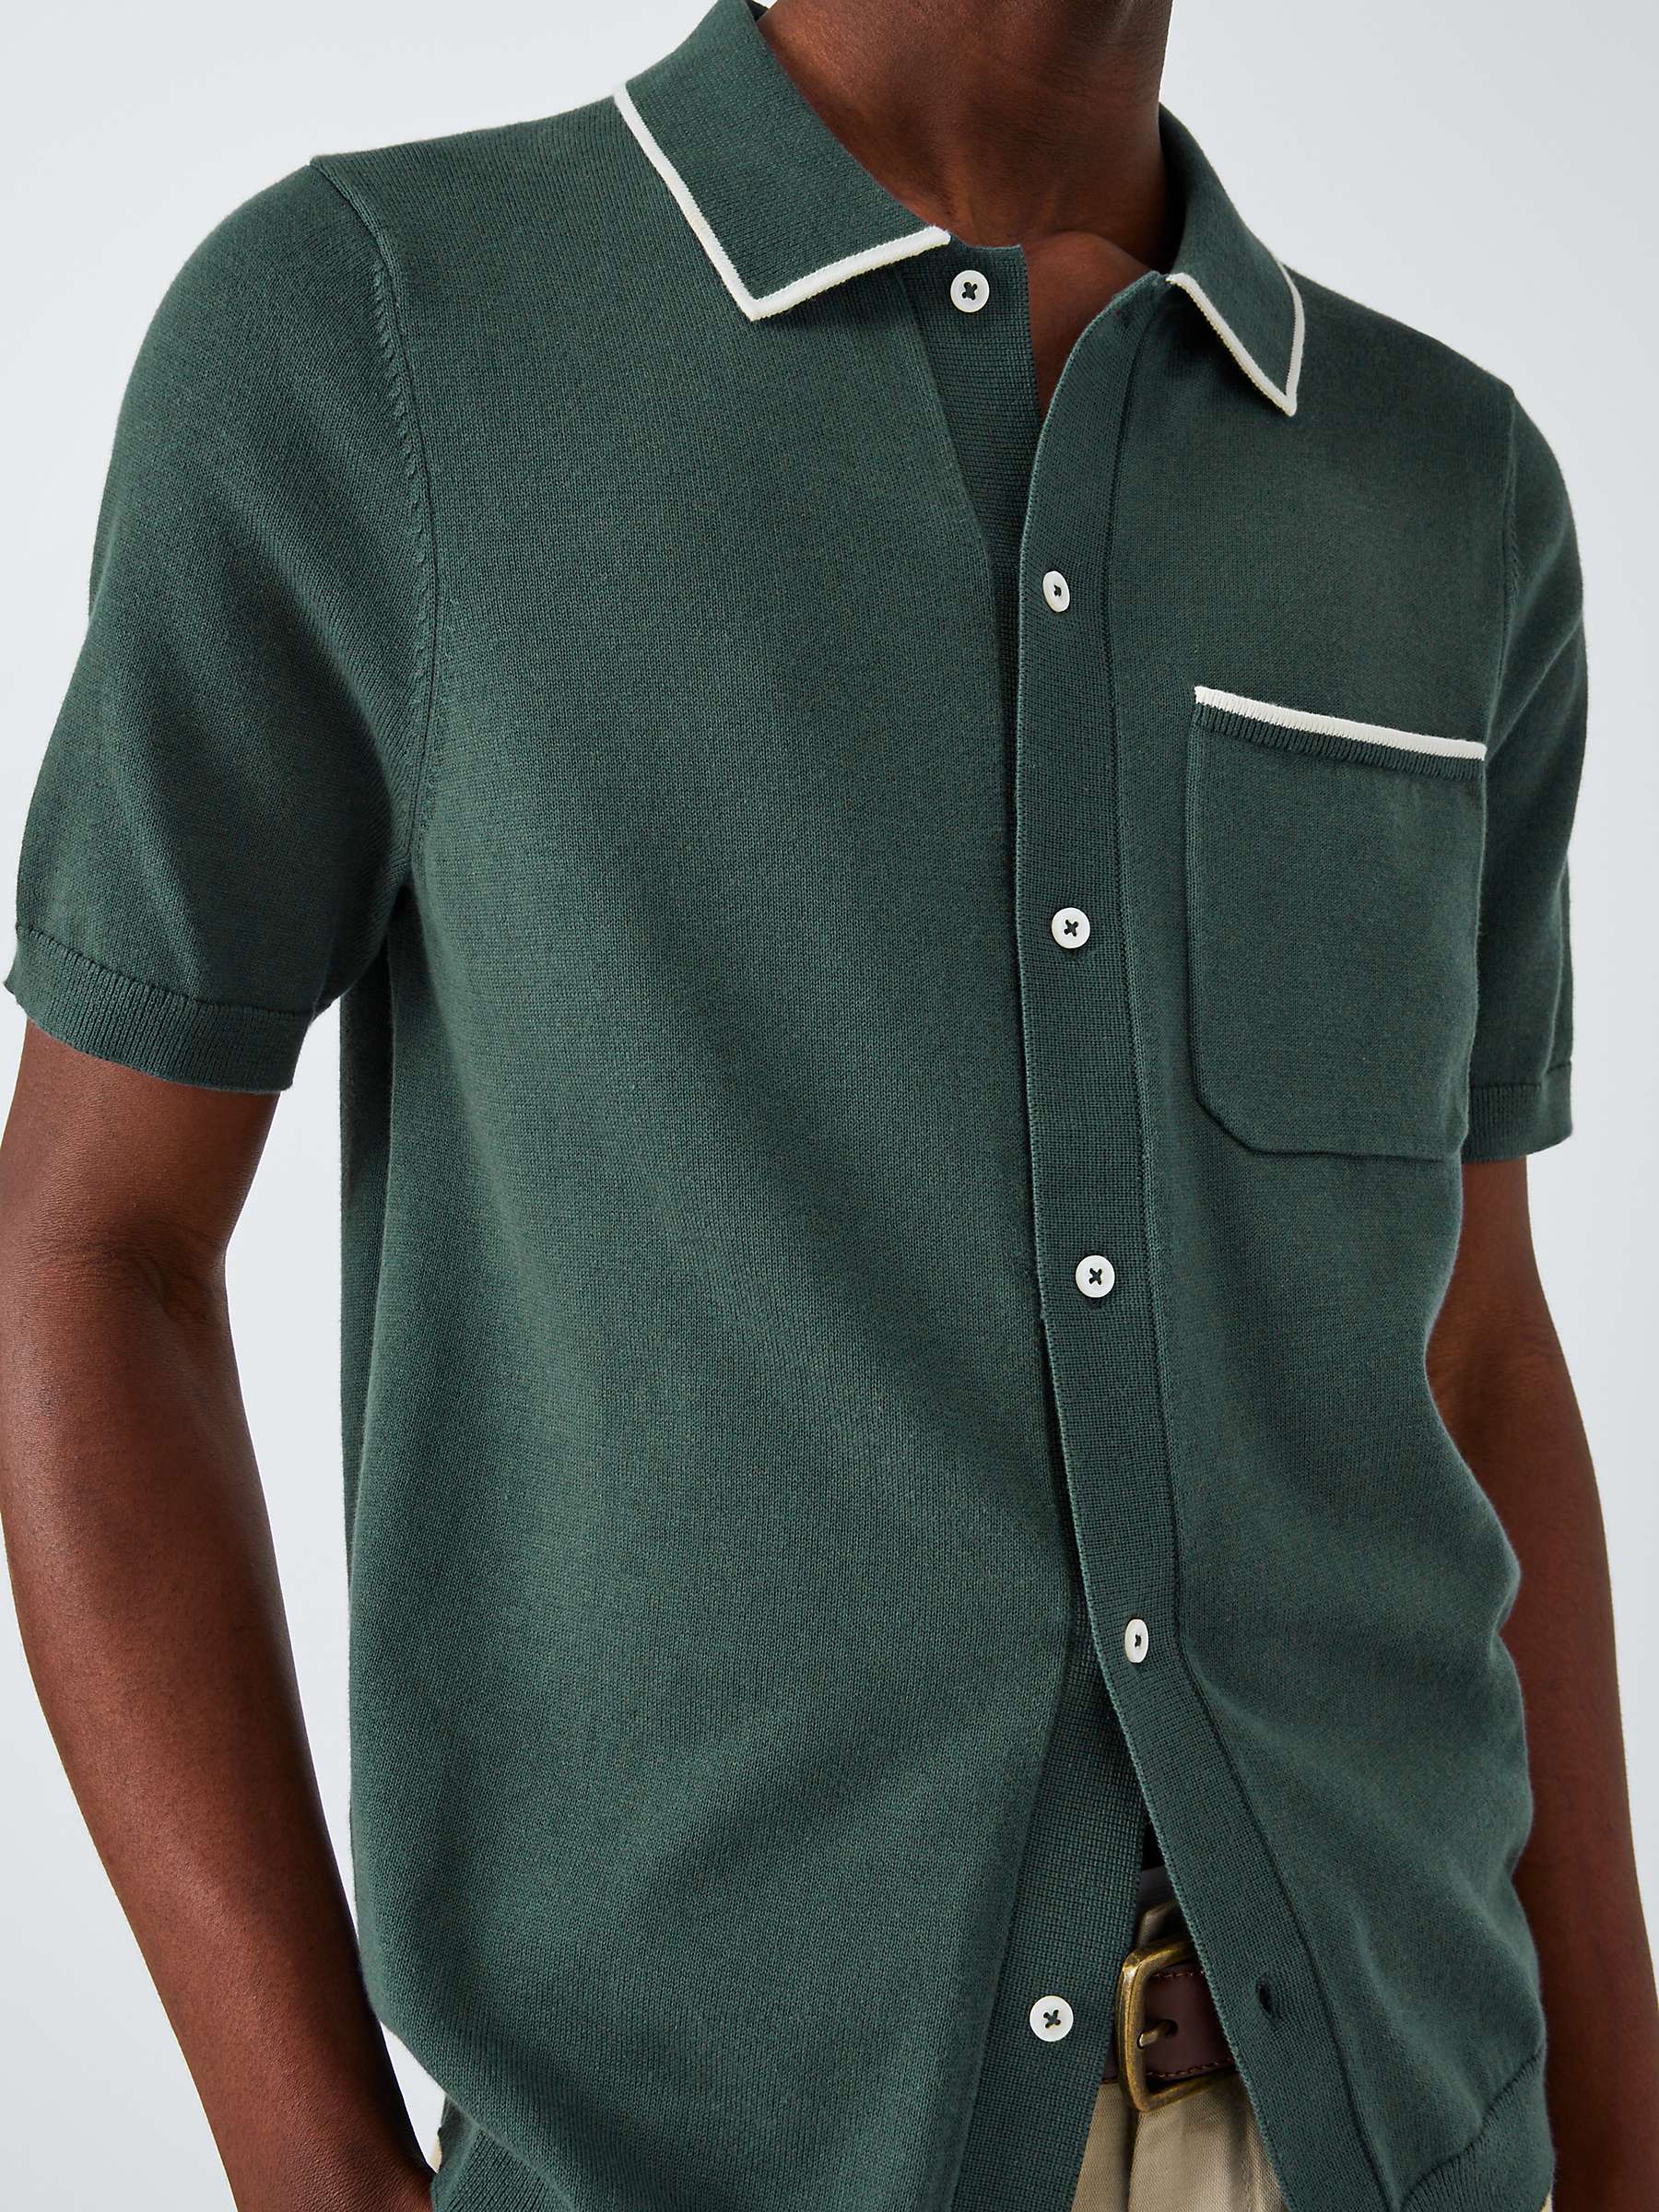 Buy John Lewis Knitted Short Sleeve Shirt Online at johnlewis.com